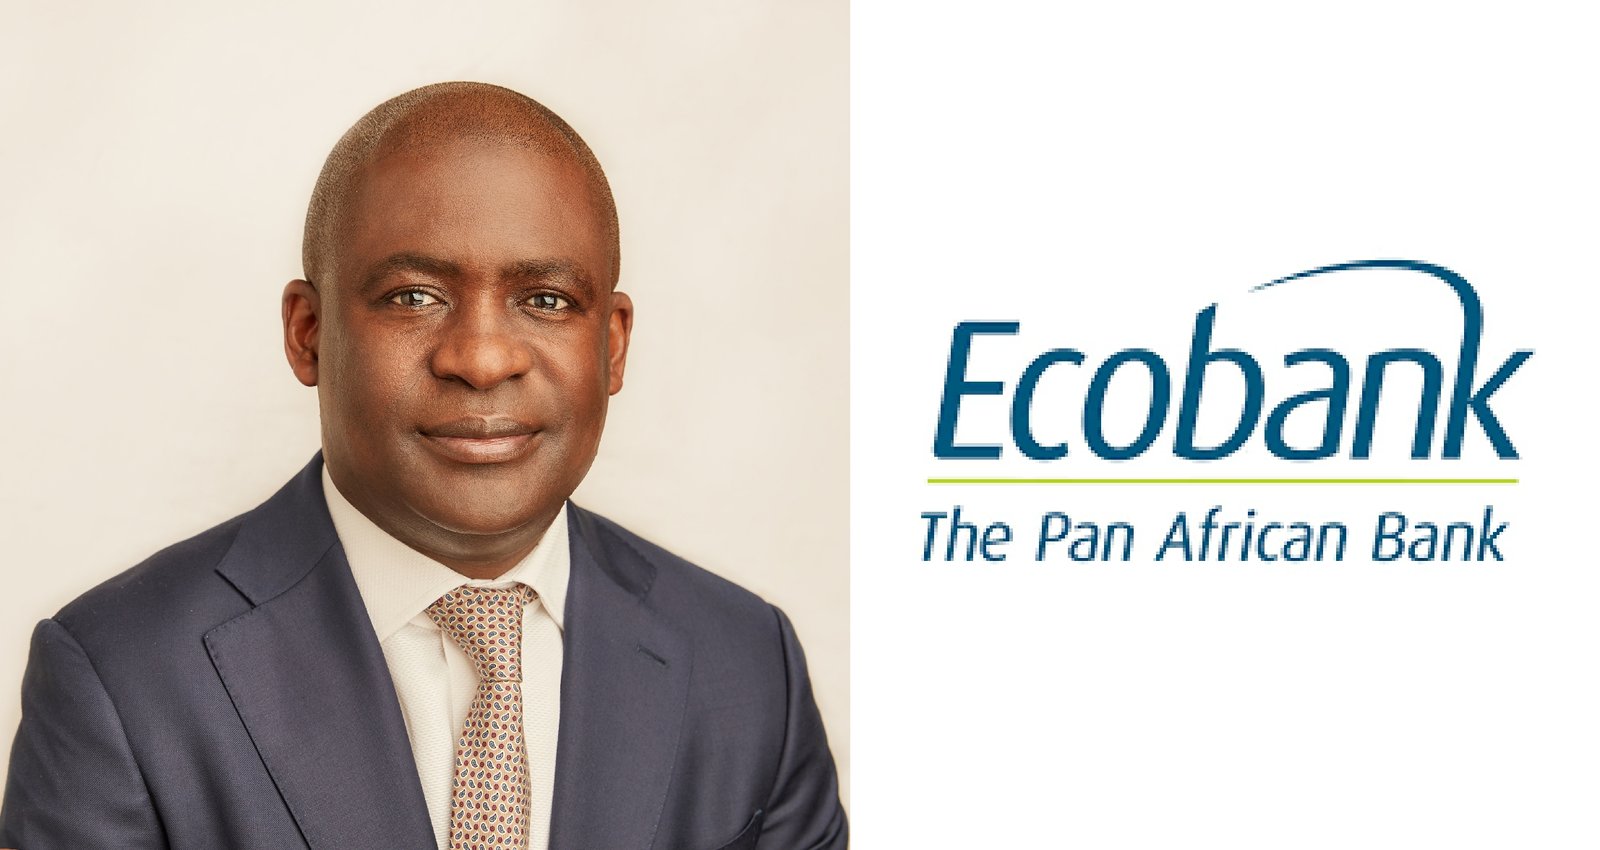 Nigeria: Ecobank Group appoints new Managing Director, as Patrick Akinwuntan retires